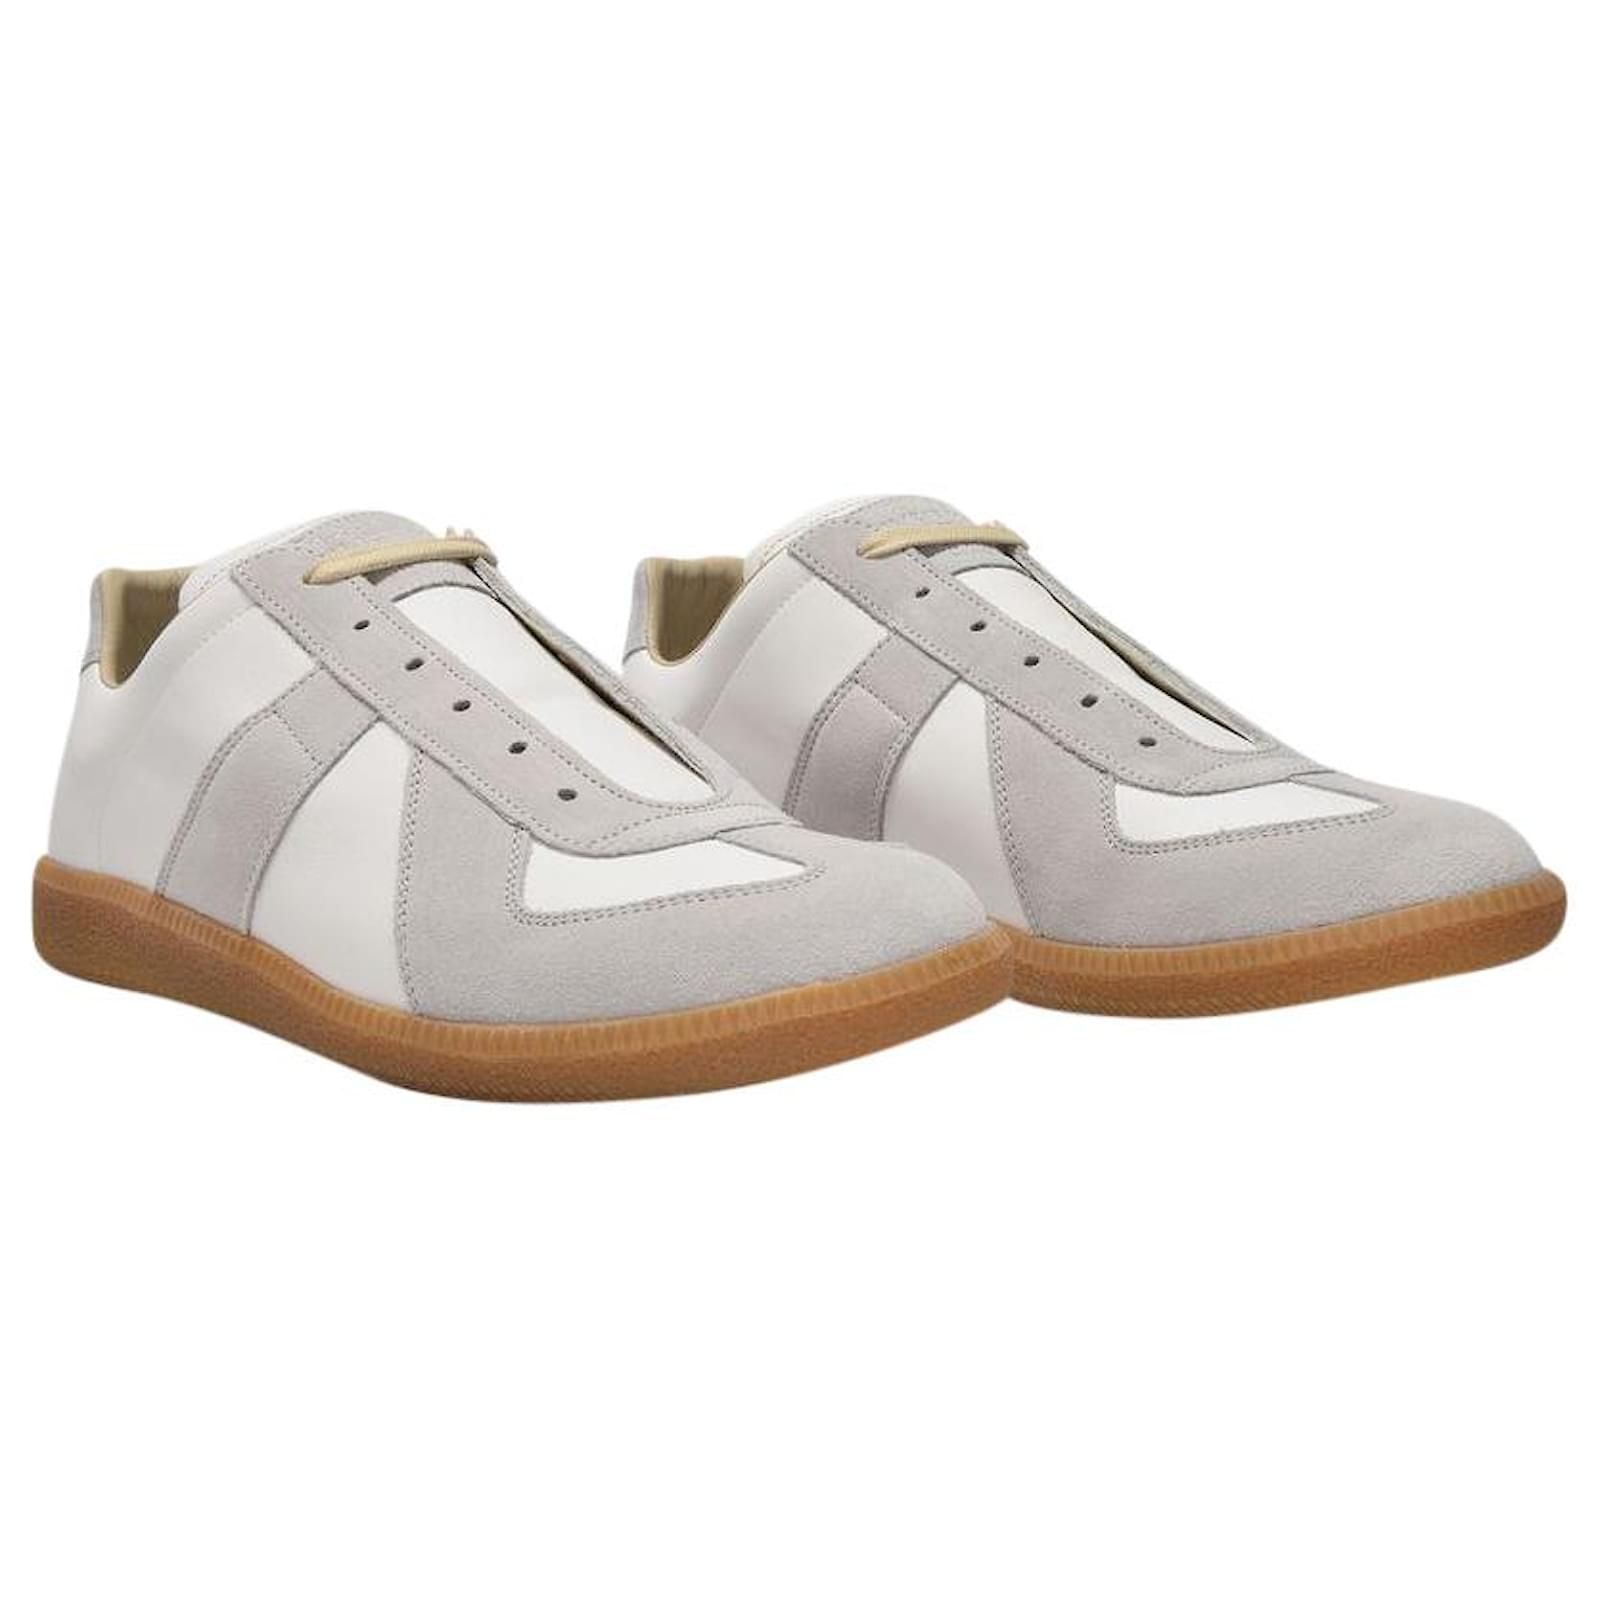 Maison Martin Margiela Replica Low Top Sneakers in White Leather ref ...